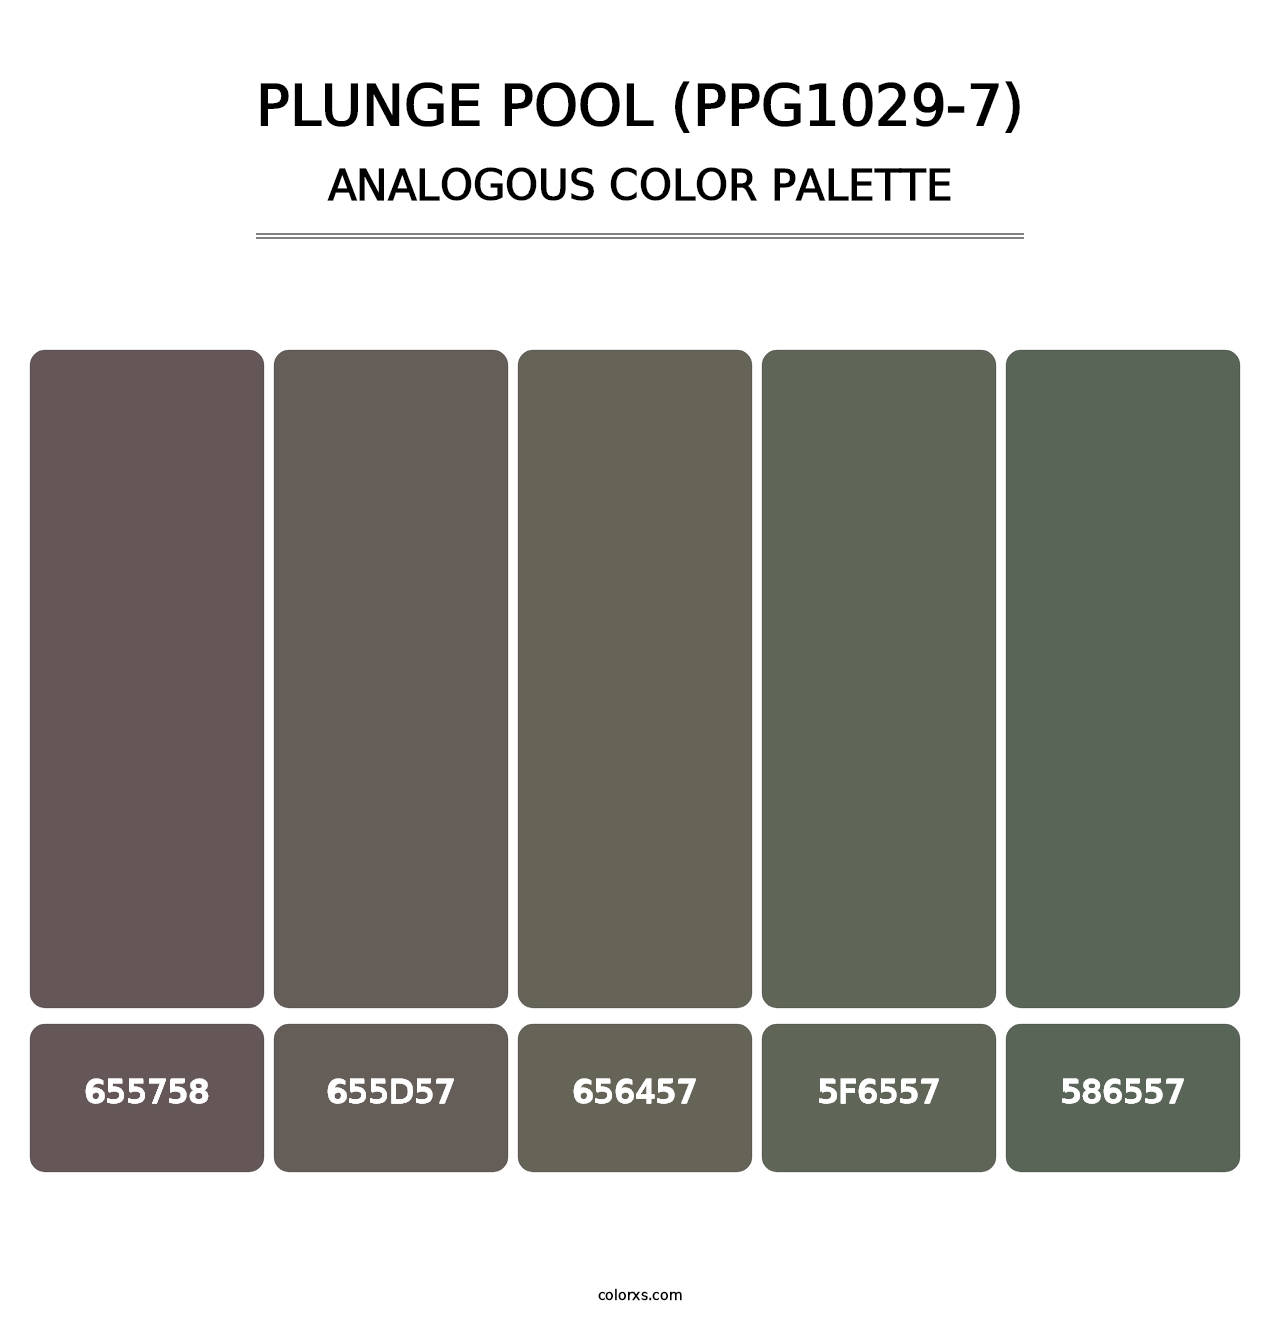 Plunge Pool (PPG1029-7) - Analogous Color Palette